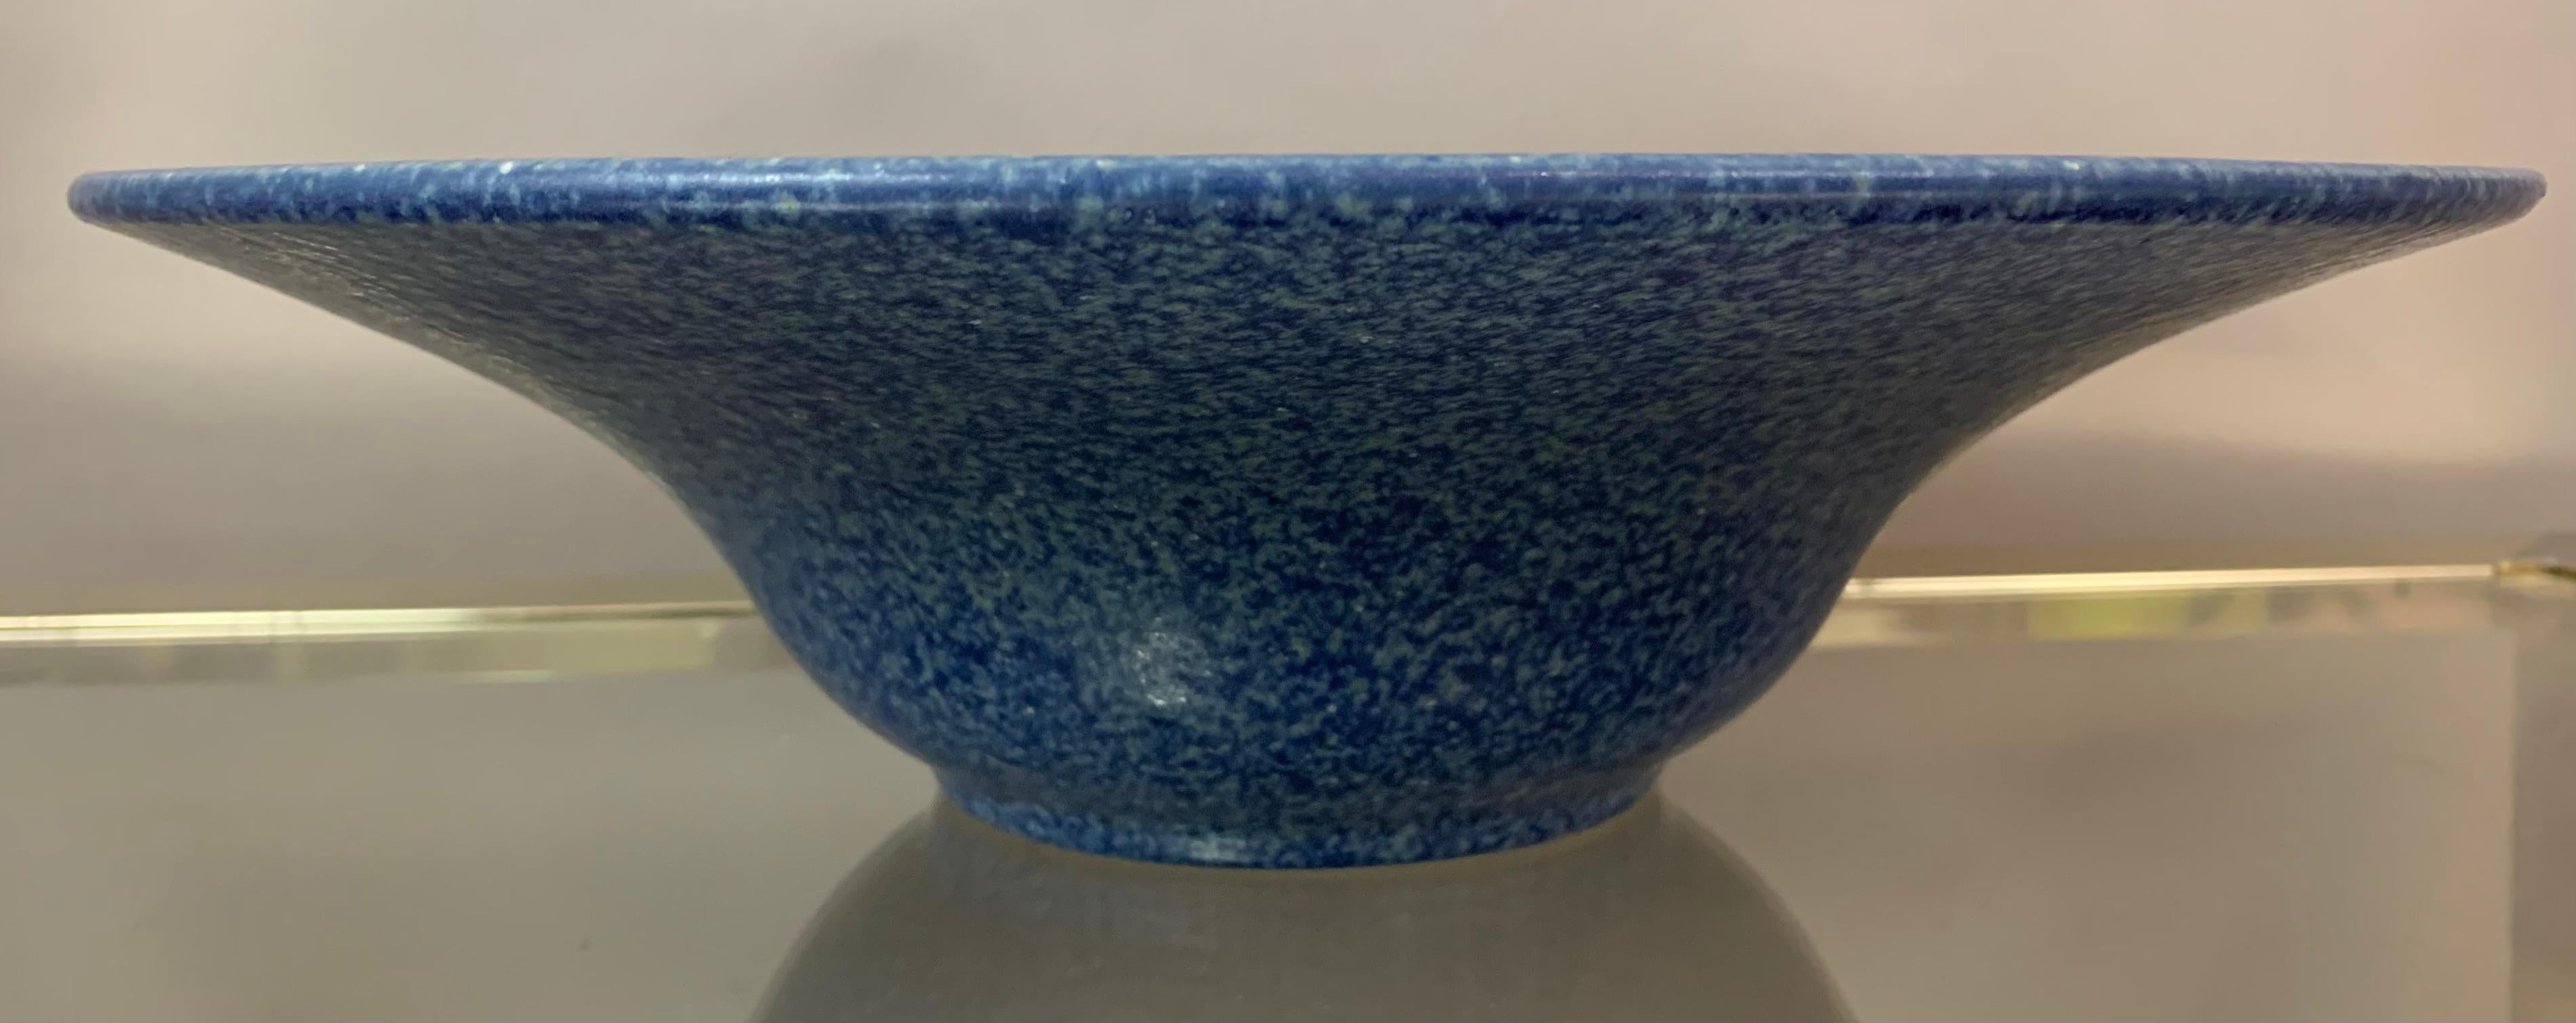 1970s German Studio Pottery Ceramic Blue Mottled Bowl by Pfeiffer Gerhards 4